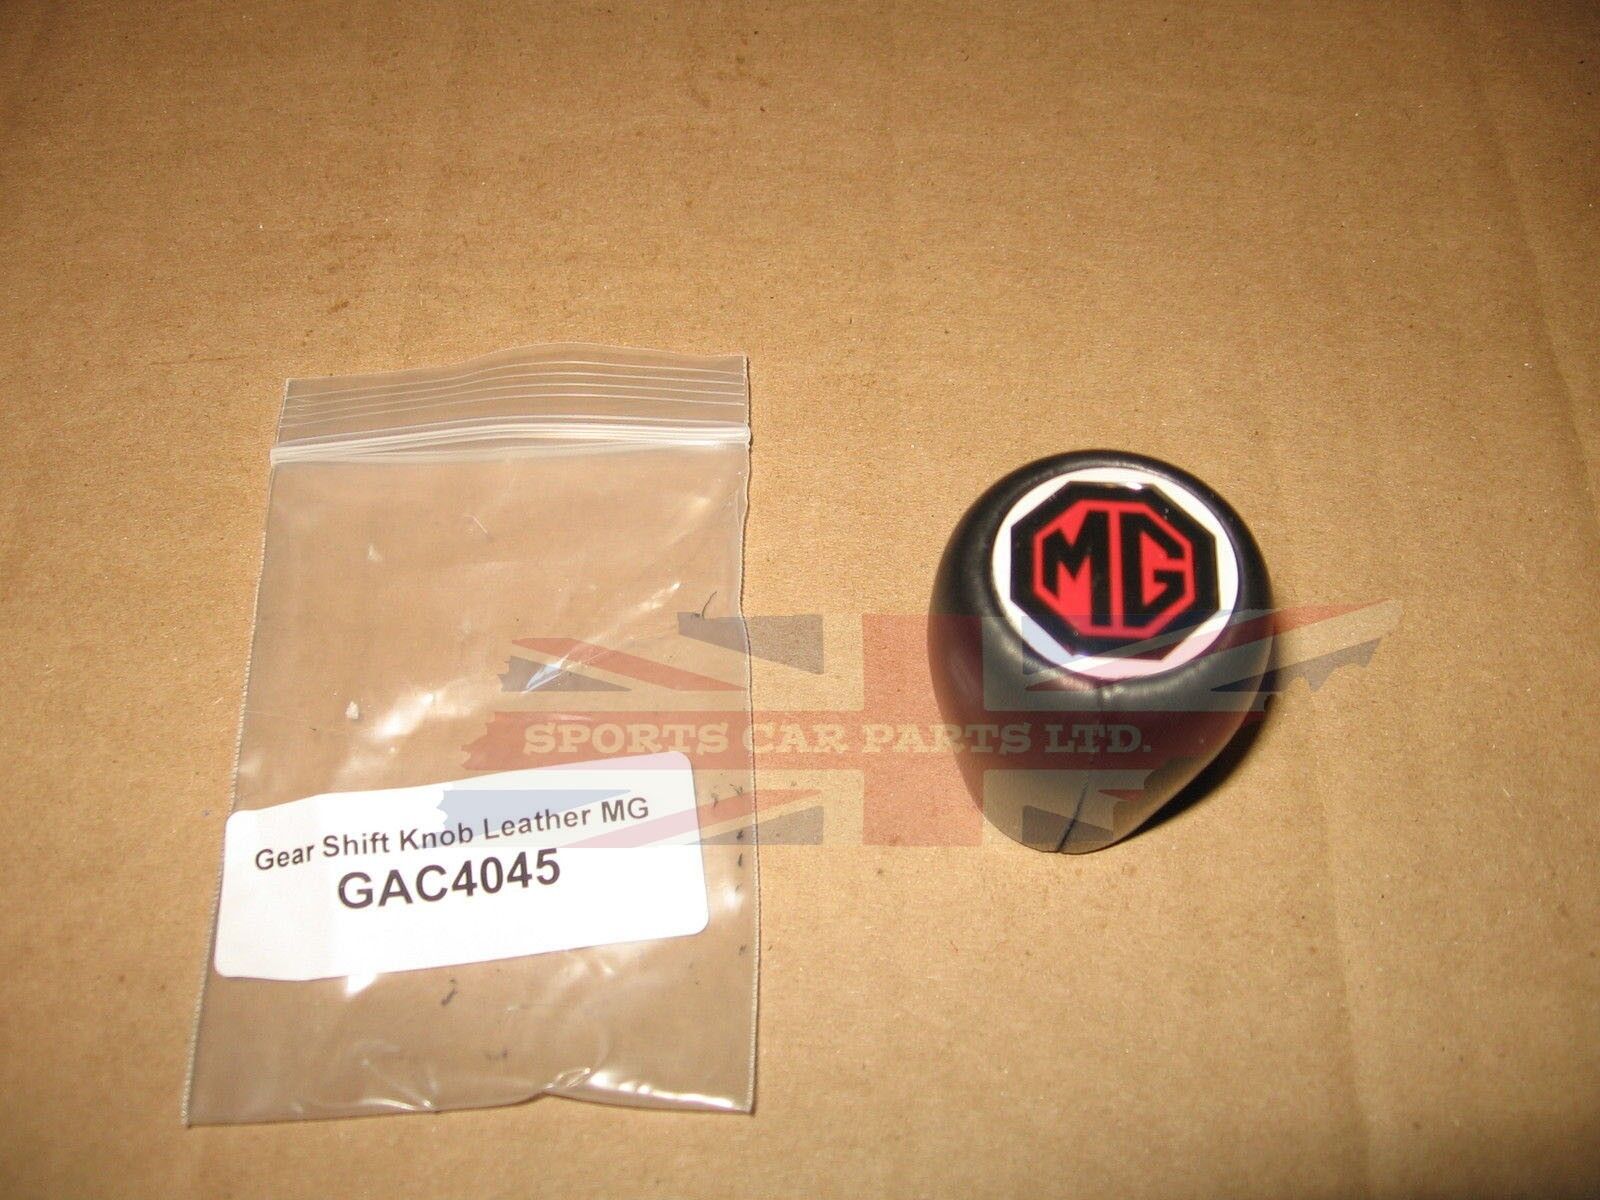 New Gear Shift Knob for MGA and MGB MG Midget 1955-1976 Leather with MG Logo